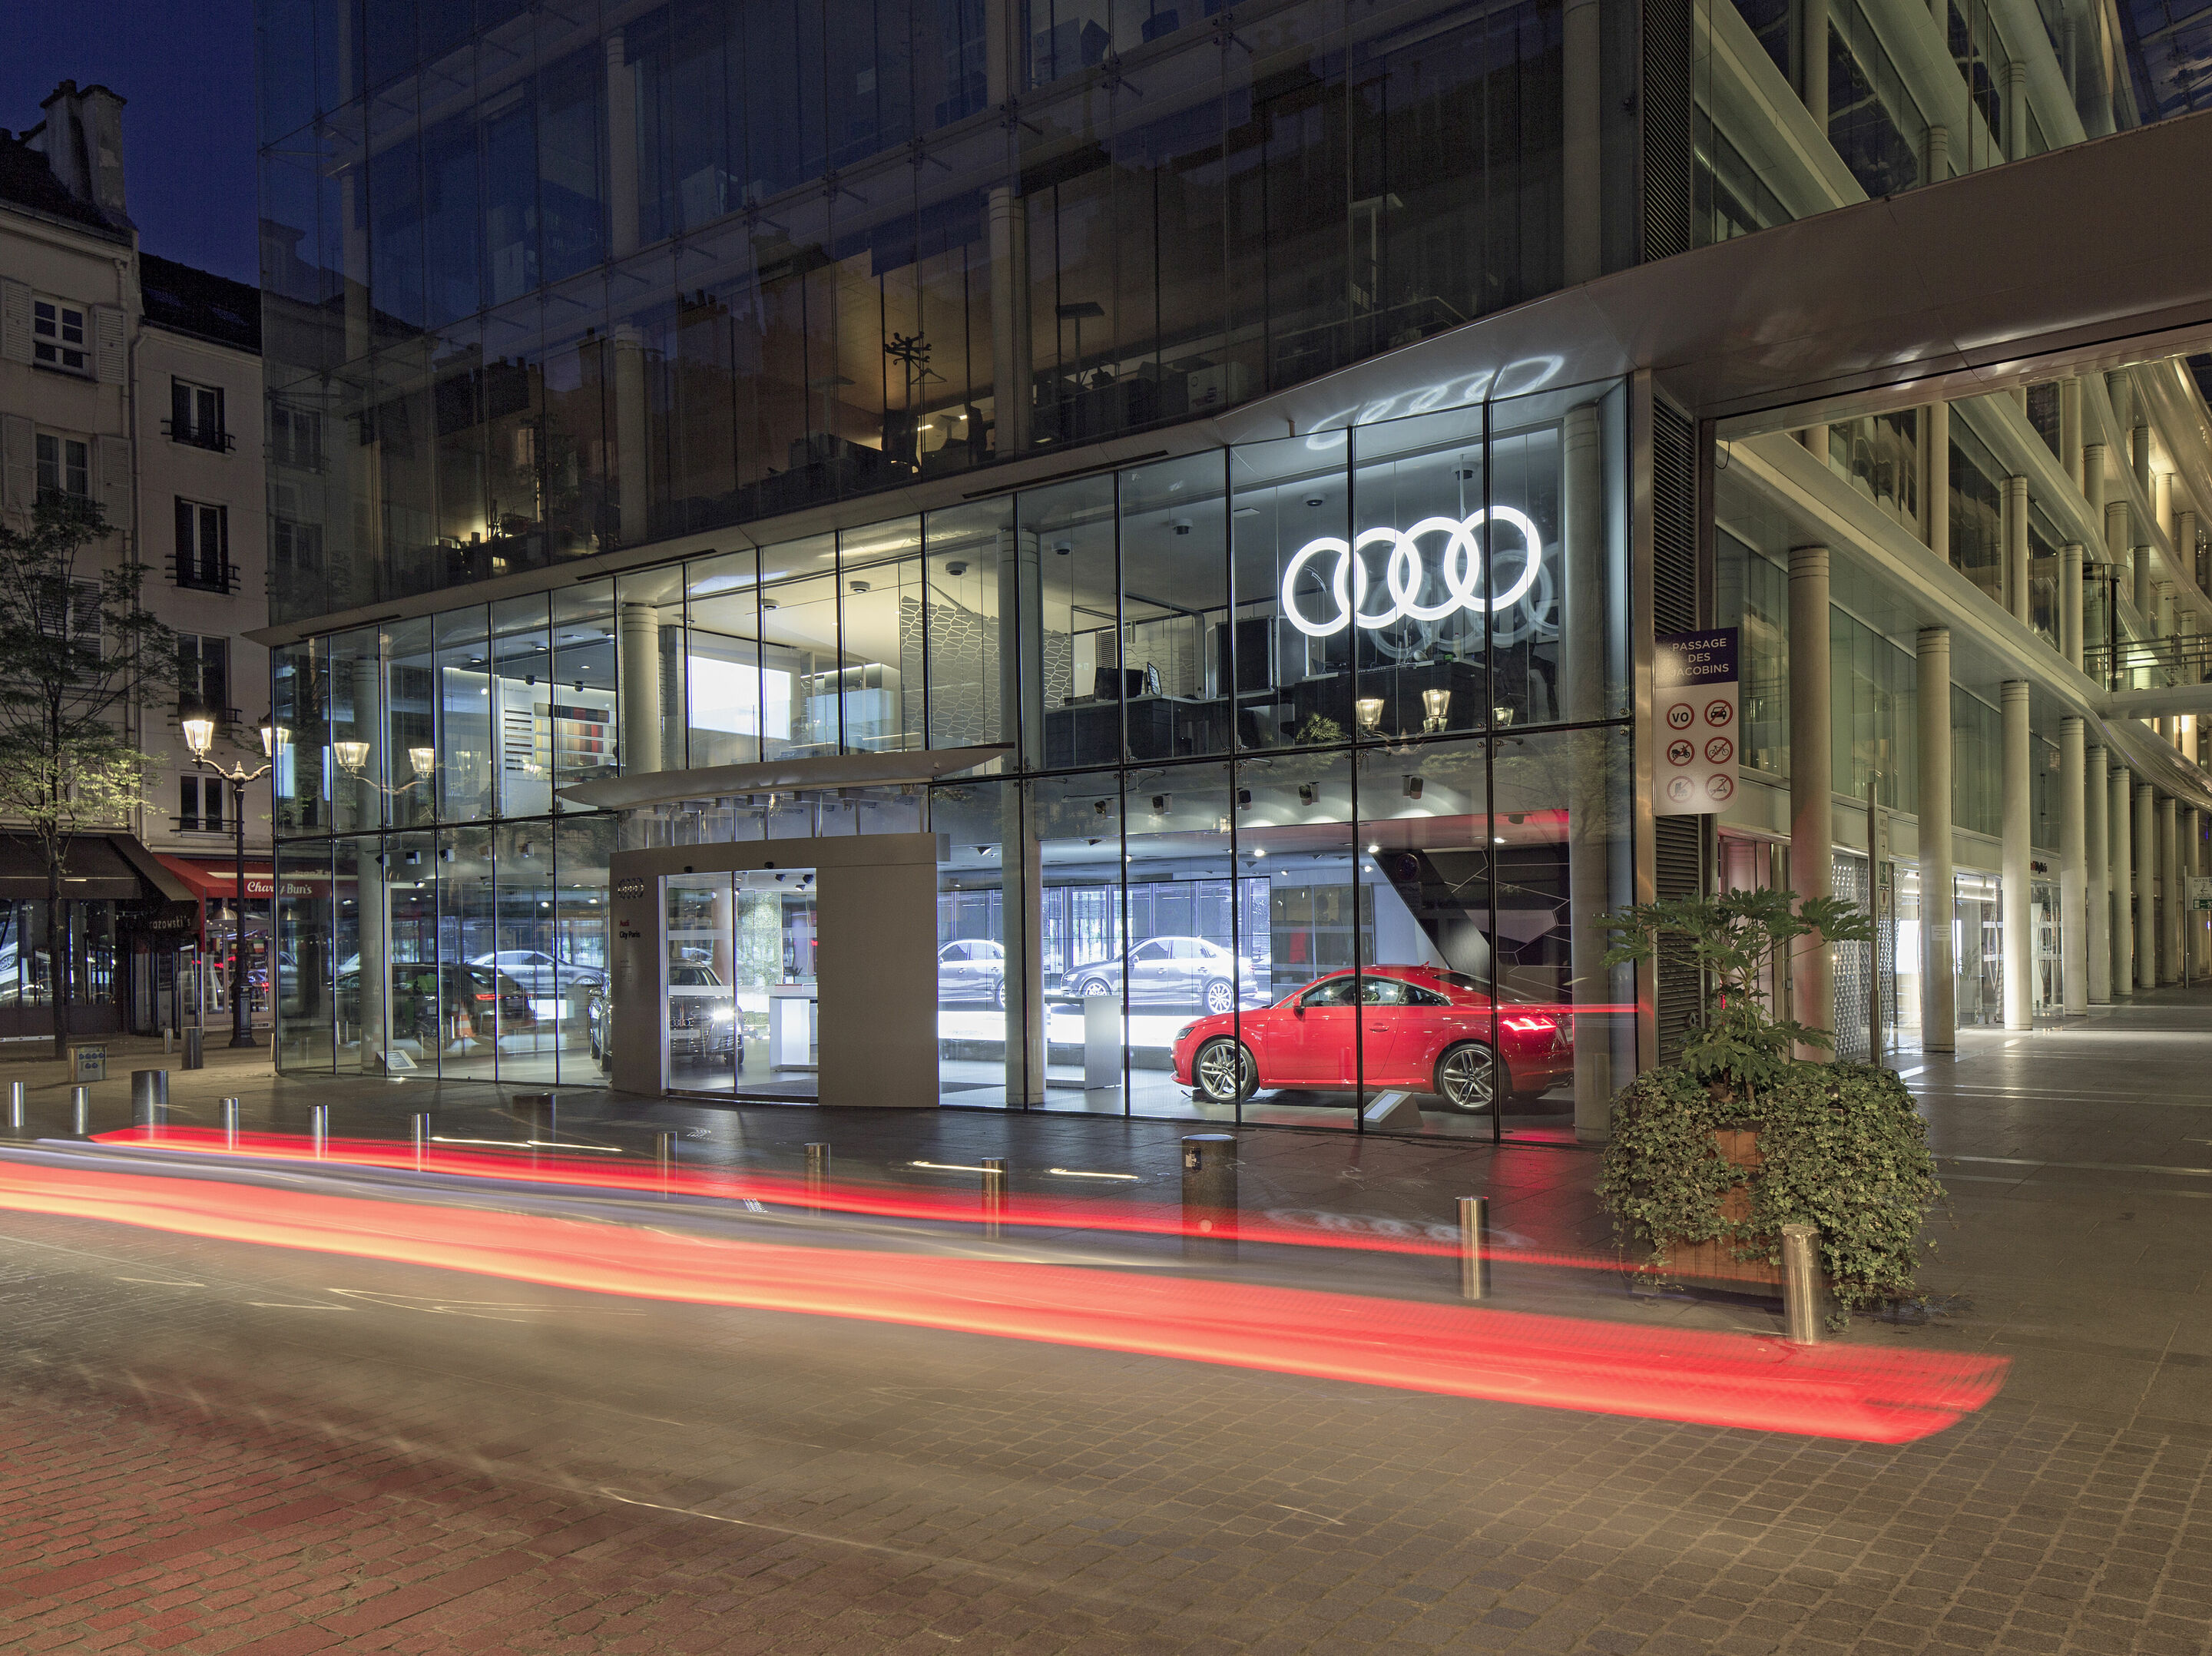 Audi City Paris: cyberstore opens at prime location